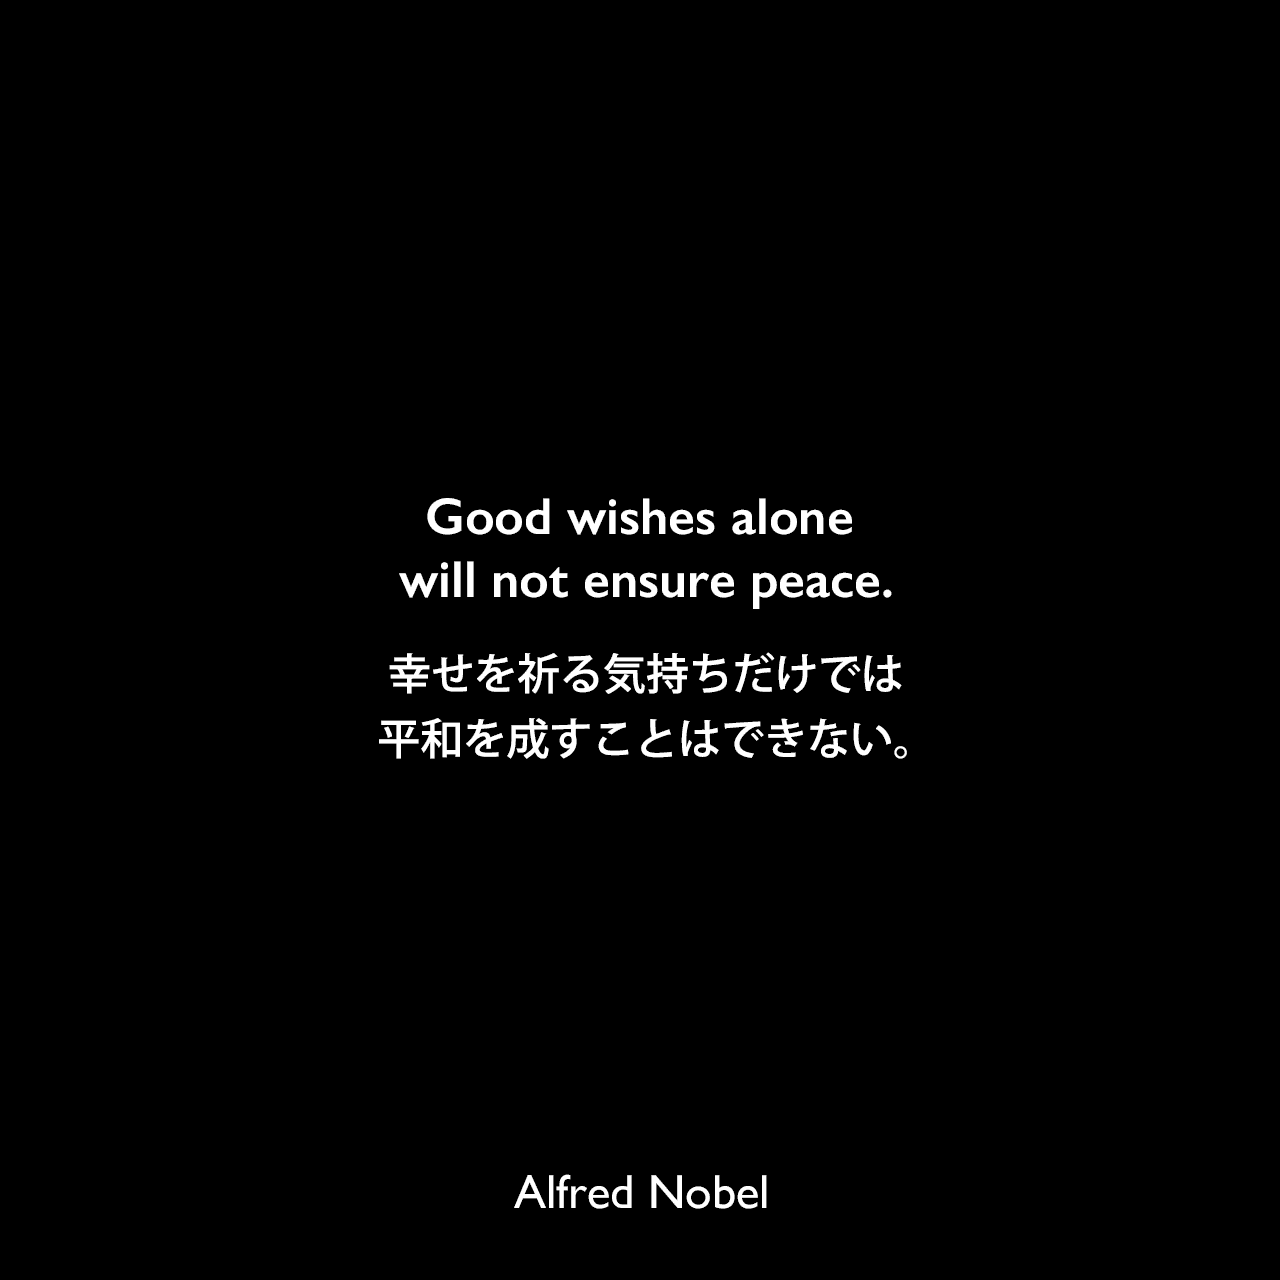 Good wishes alone will not ensure peace.幸せを祈る気持ちだけでは、平和を成すことはできない。Alfred Nobel